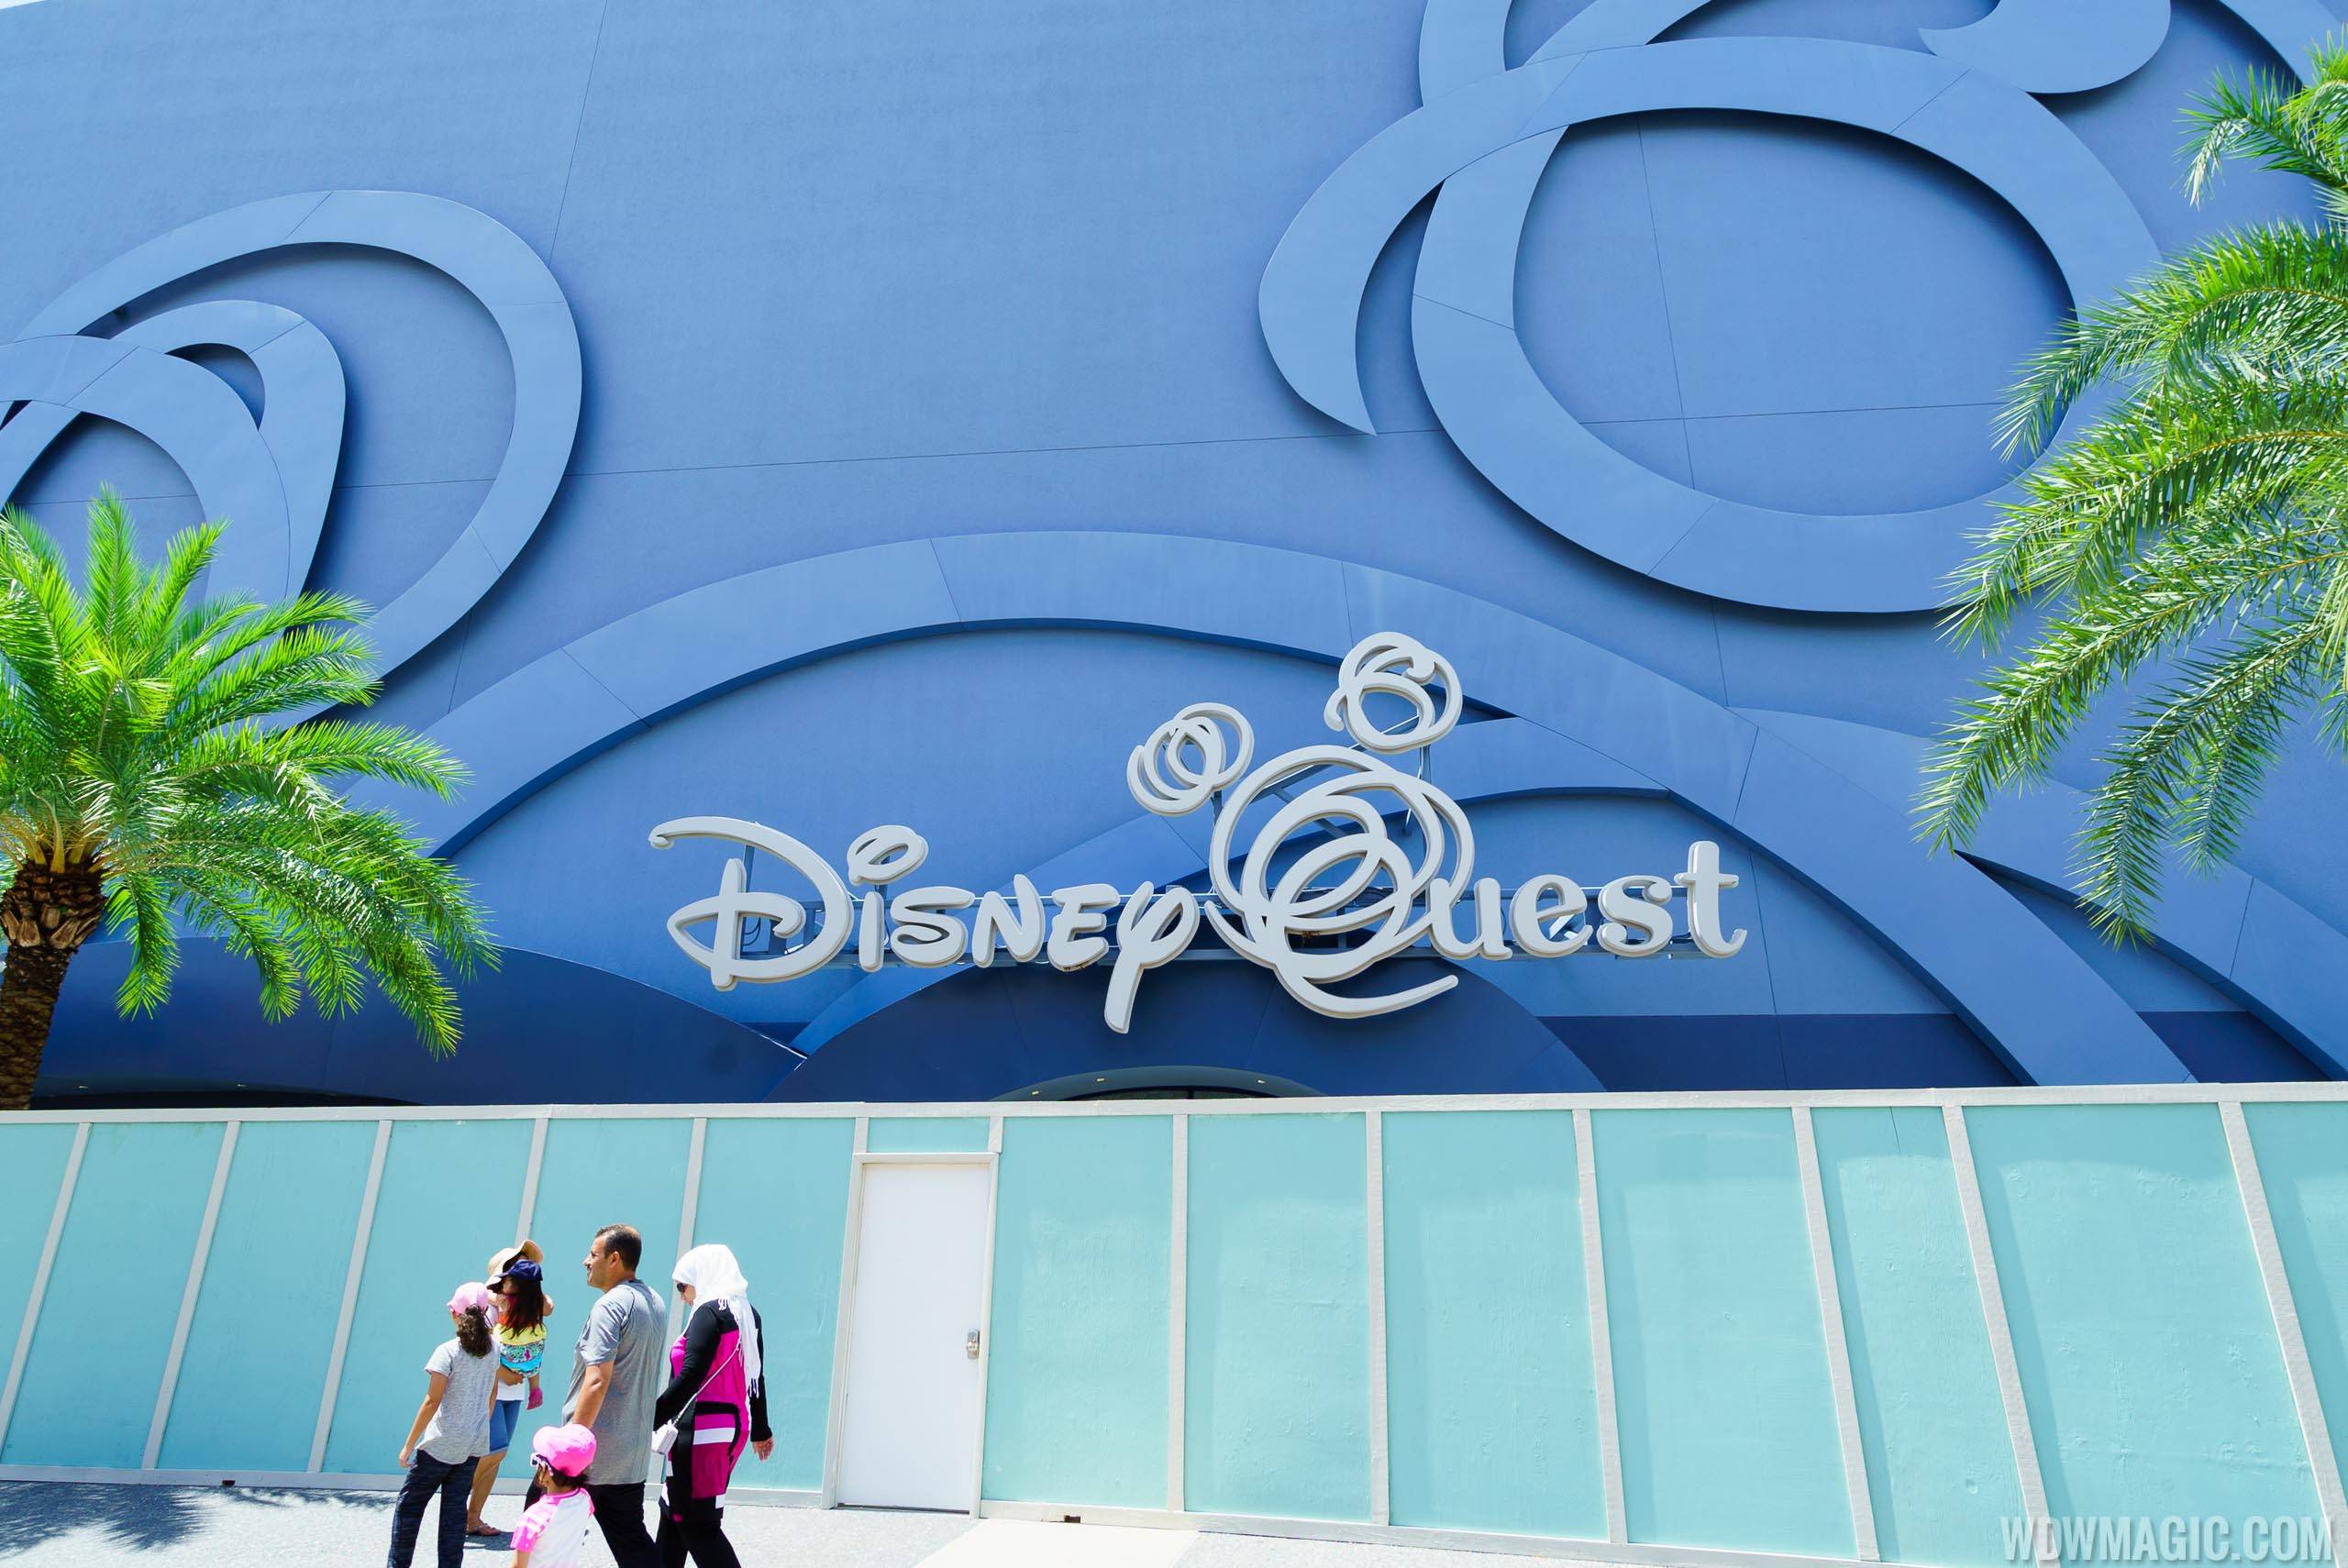 Walls around closed Disney Quest